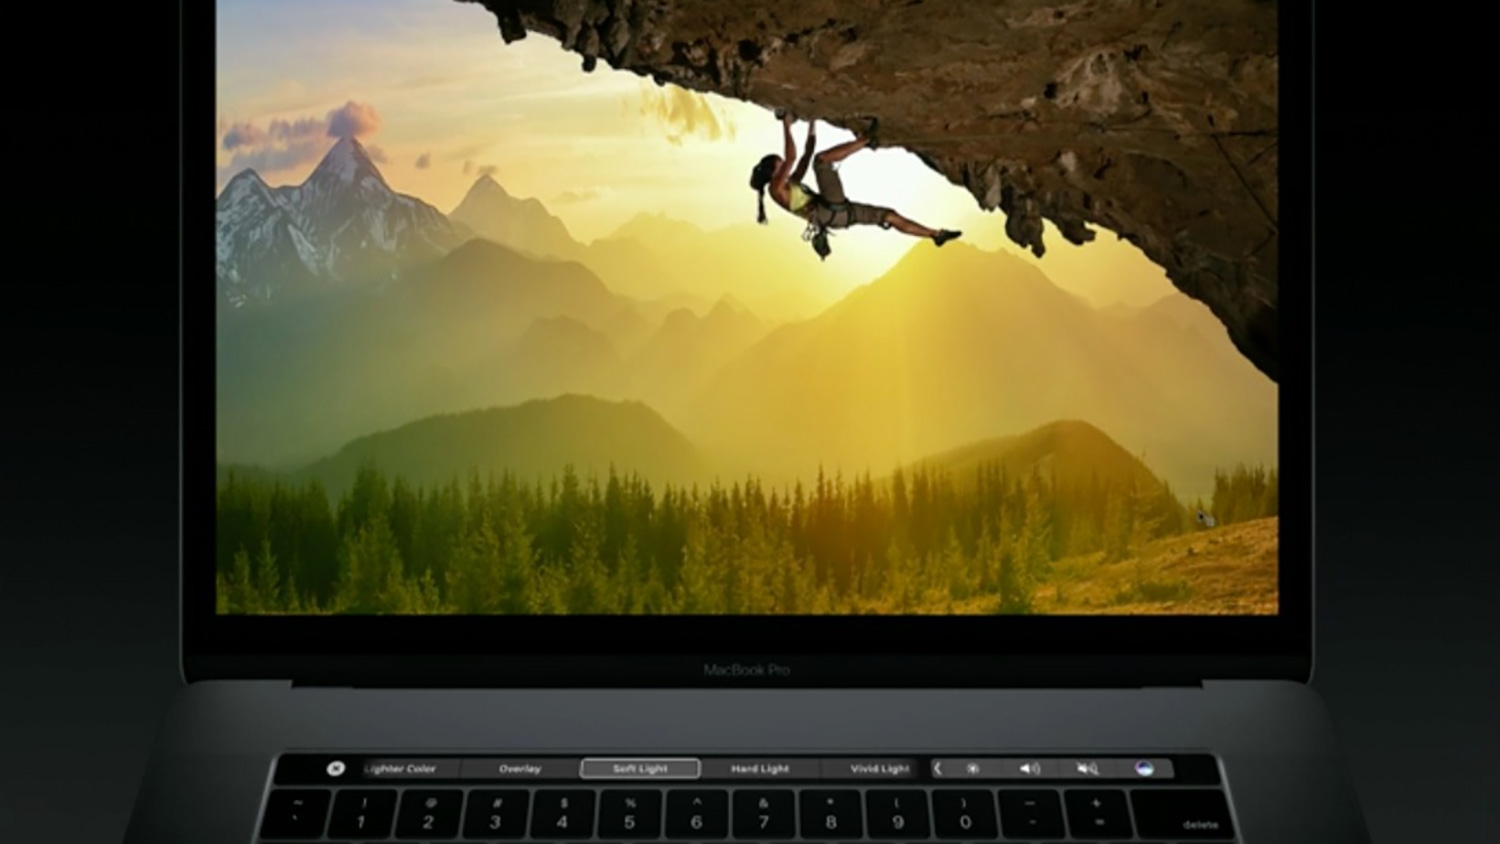 adobe acrobat pro for macbook pro